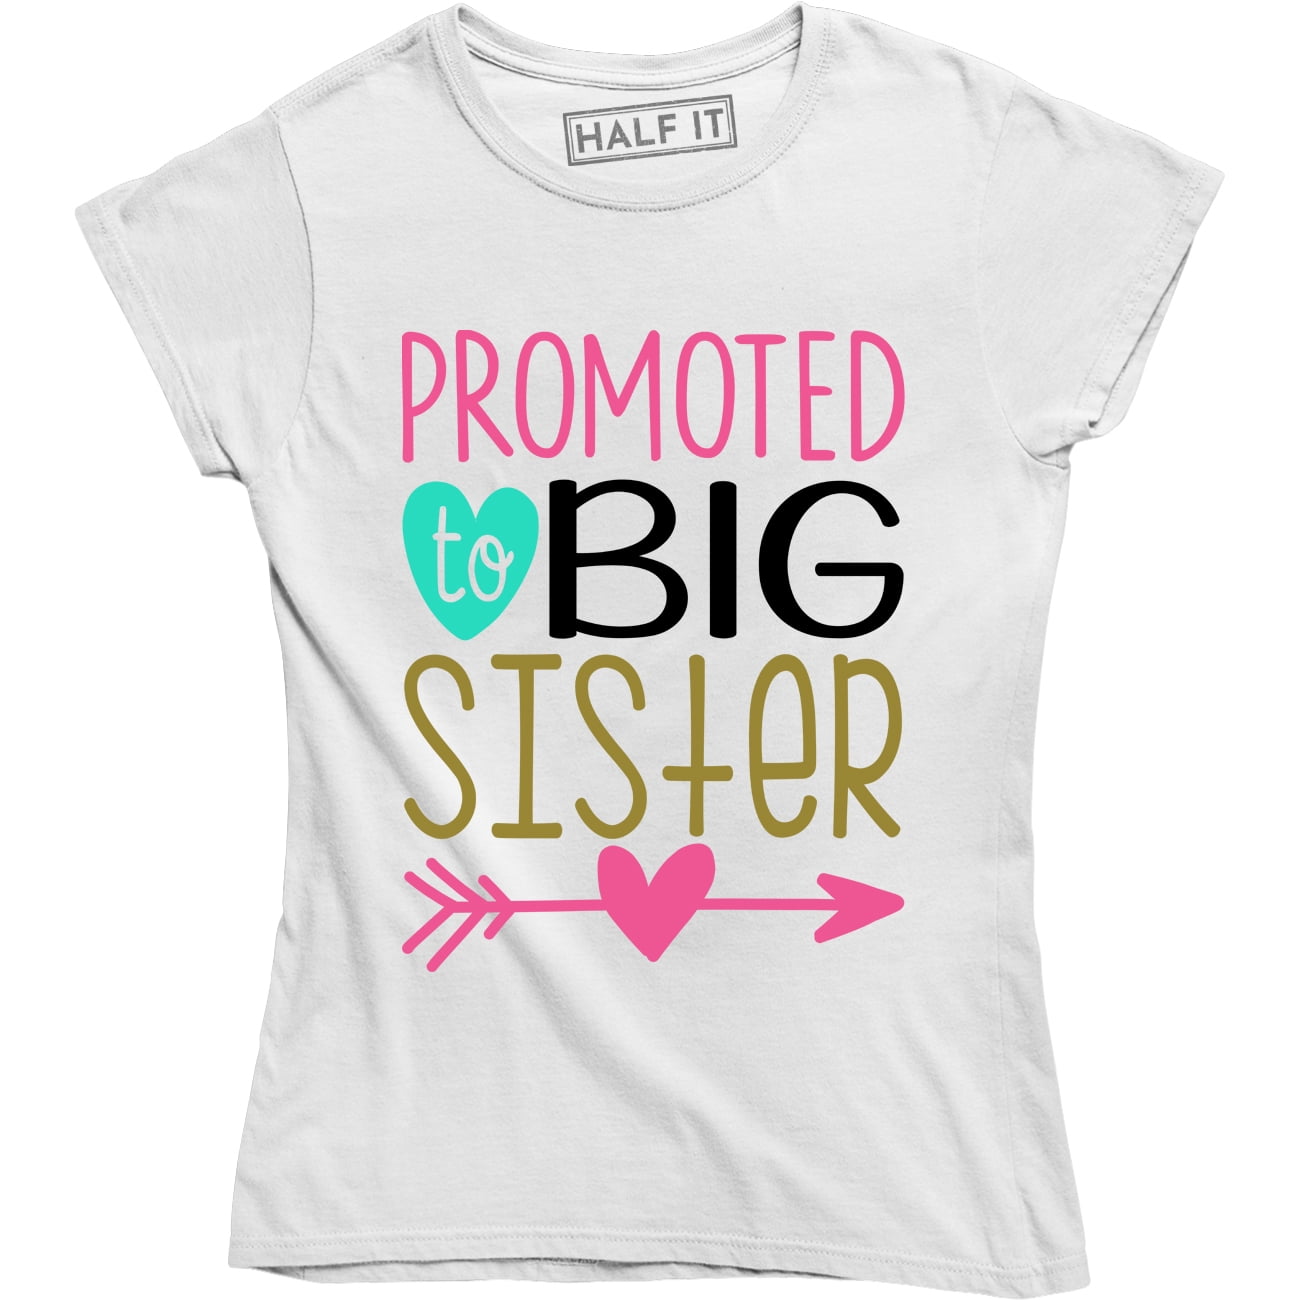 Big Sis T-Shirt Big Sister Shirt Pregnancy Announcement Shirt Promoted To Big Sister Tee Toddler Girl T-Shirt B Is For Big Sister Tee